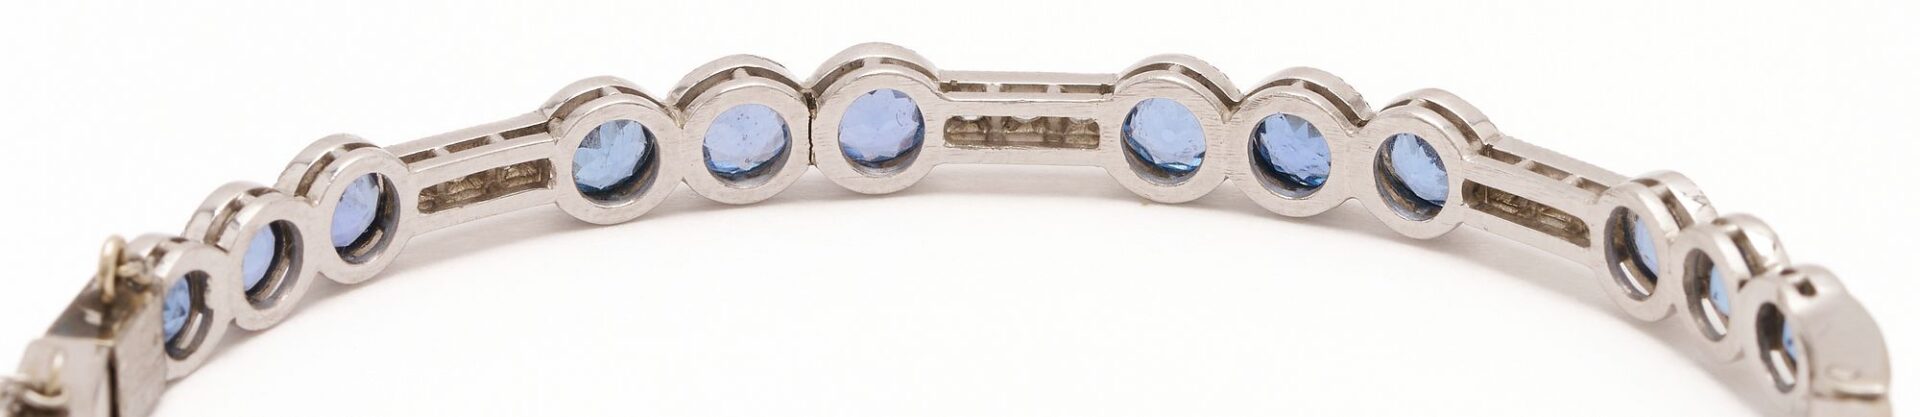 Lot 1035: Platinum, Sapphire, & Diamond Bracelet